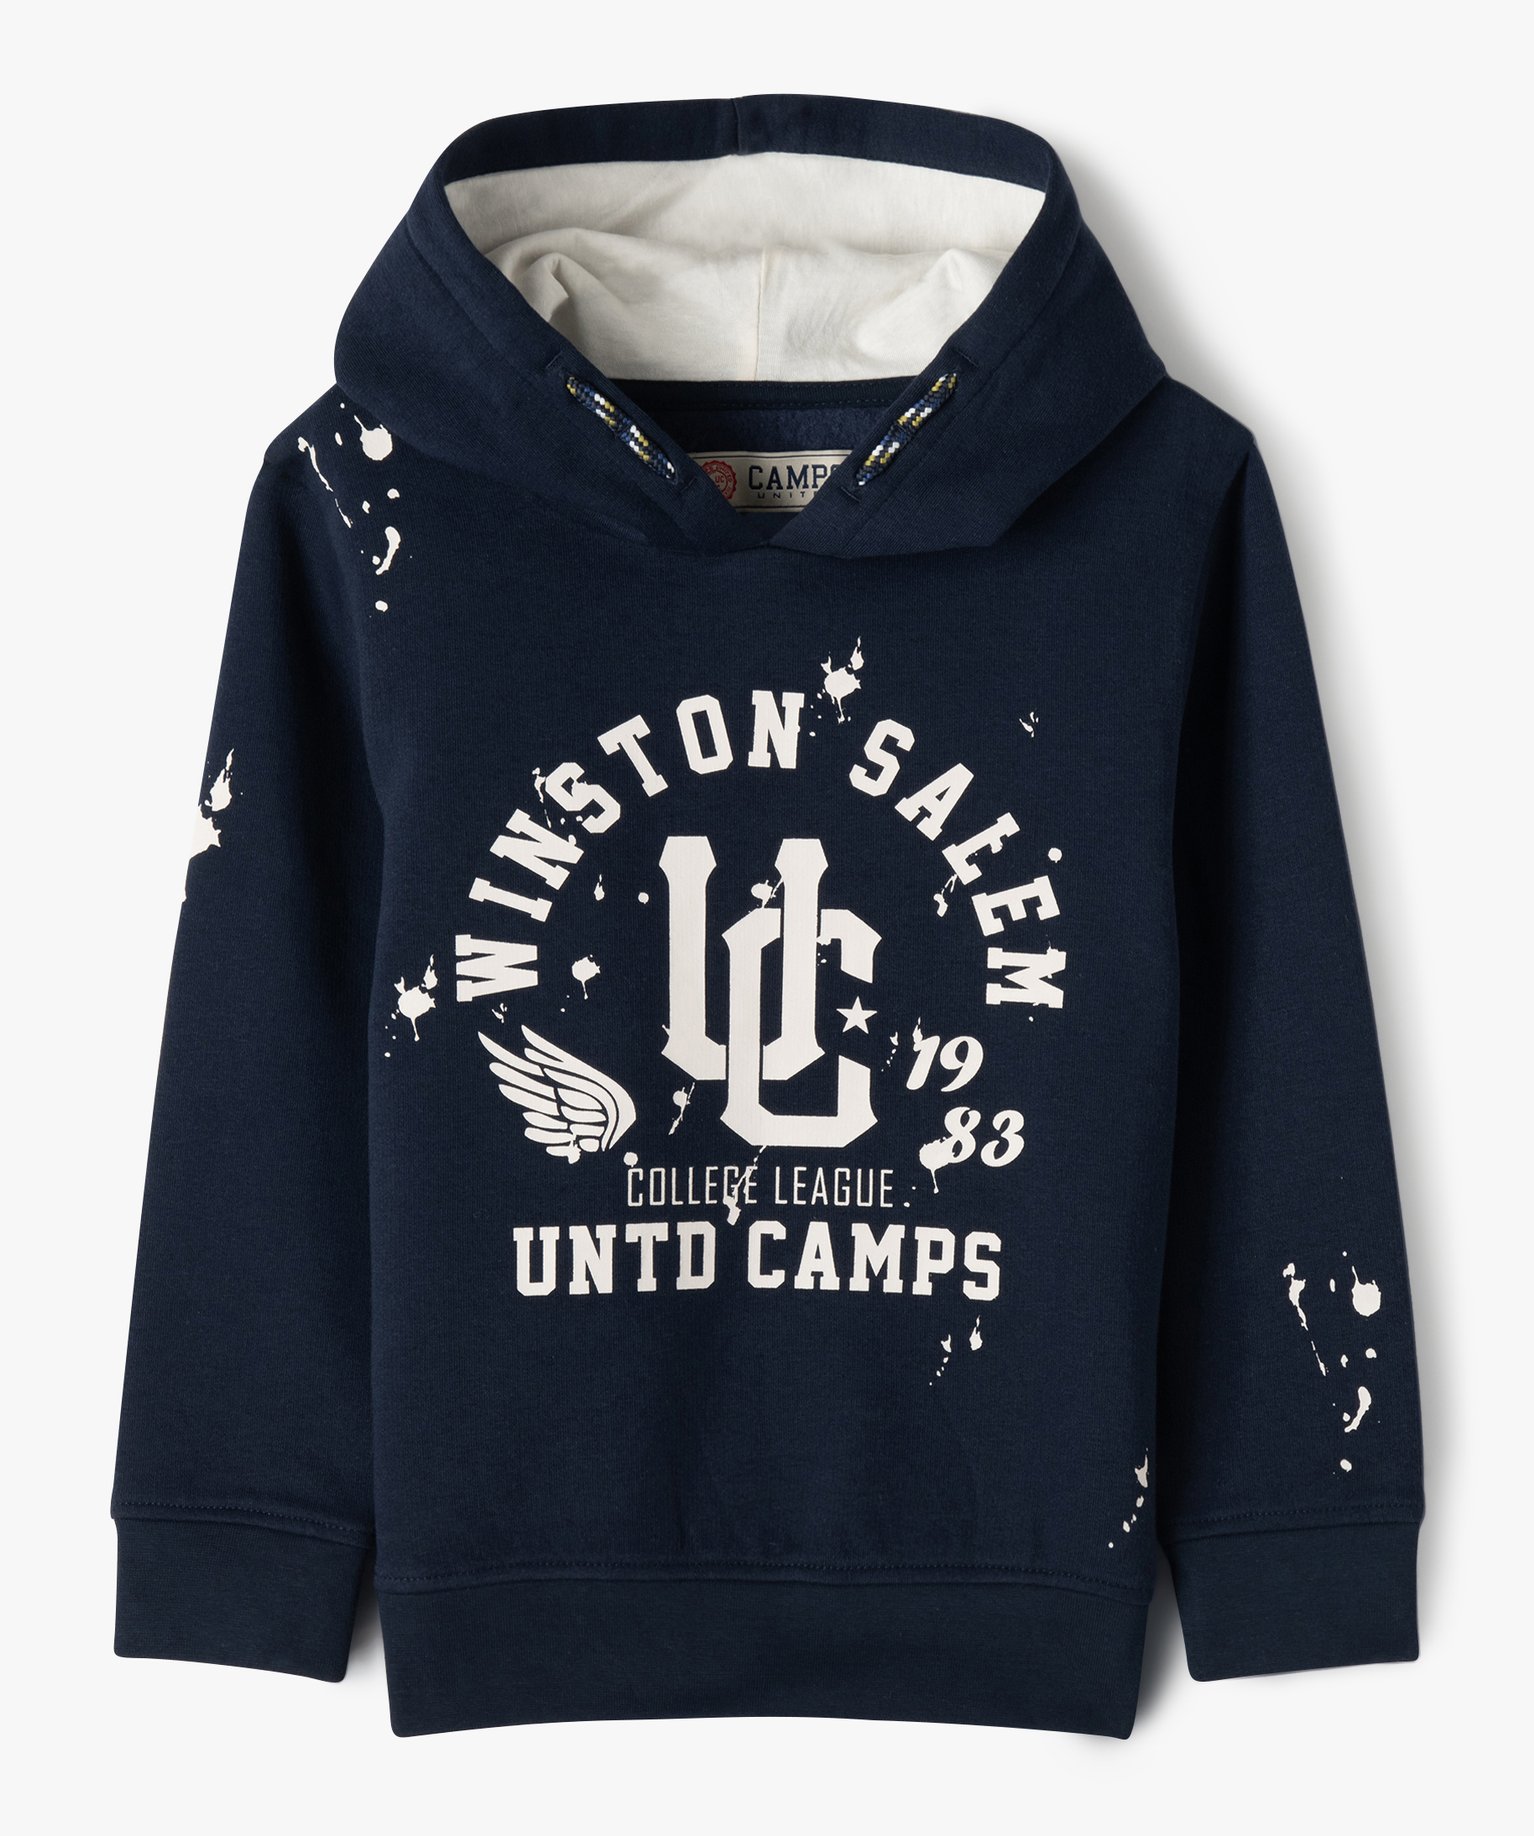 Sweat à capuche imprimé garçon - Camps United - 12 - marine - CAMPS